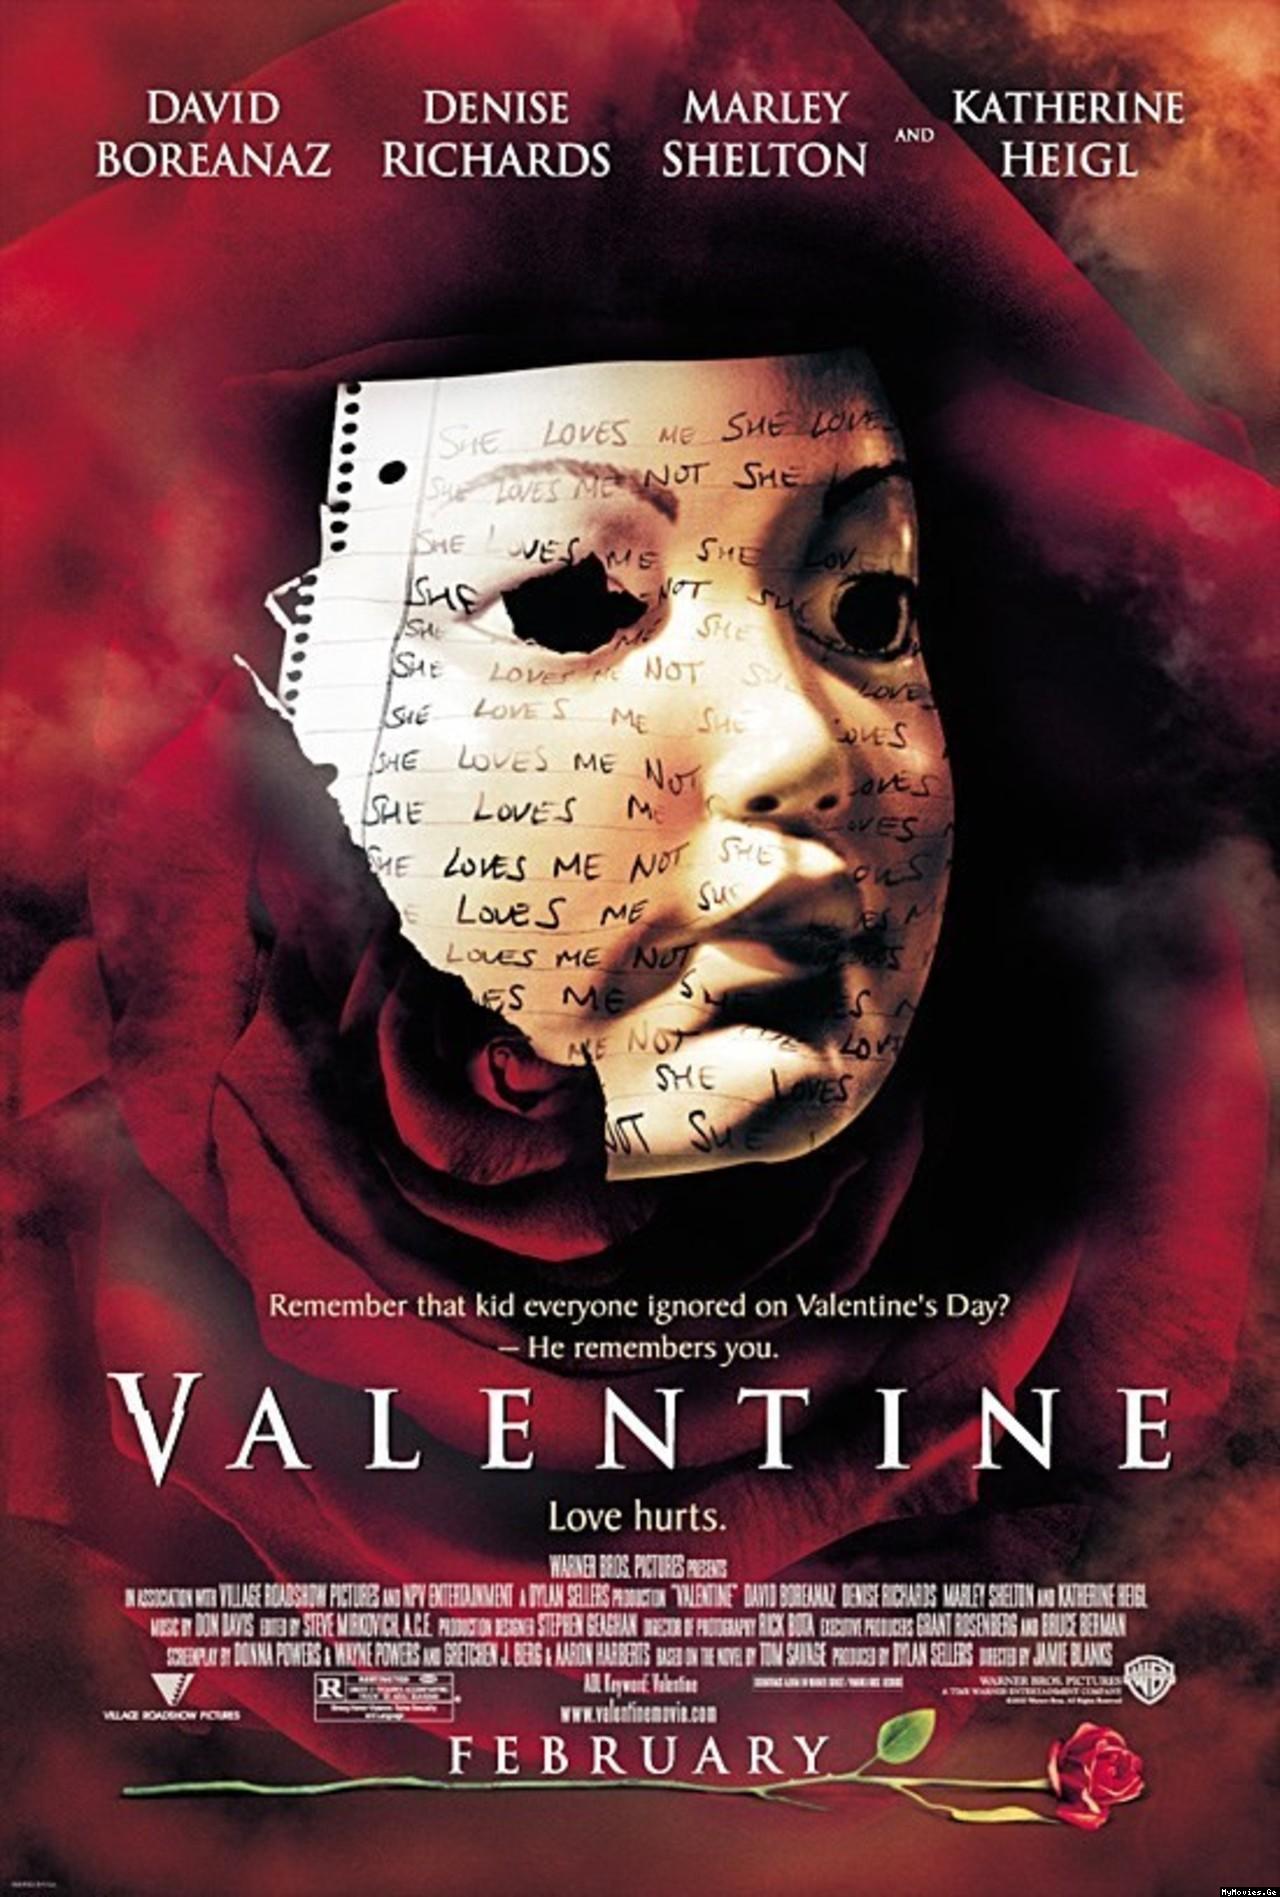 Ölümcül Bedel - Valentine (2001) 1080p.bdrip.tr-en dual N3w7b4r